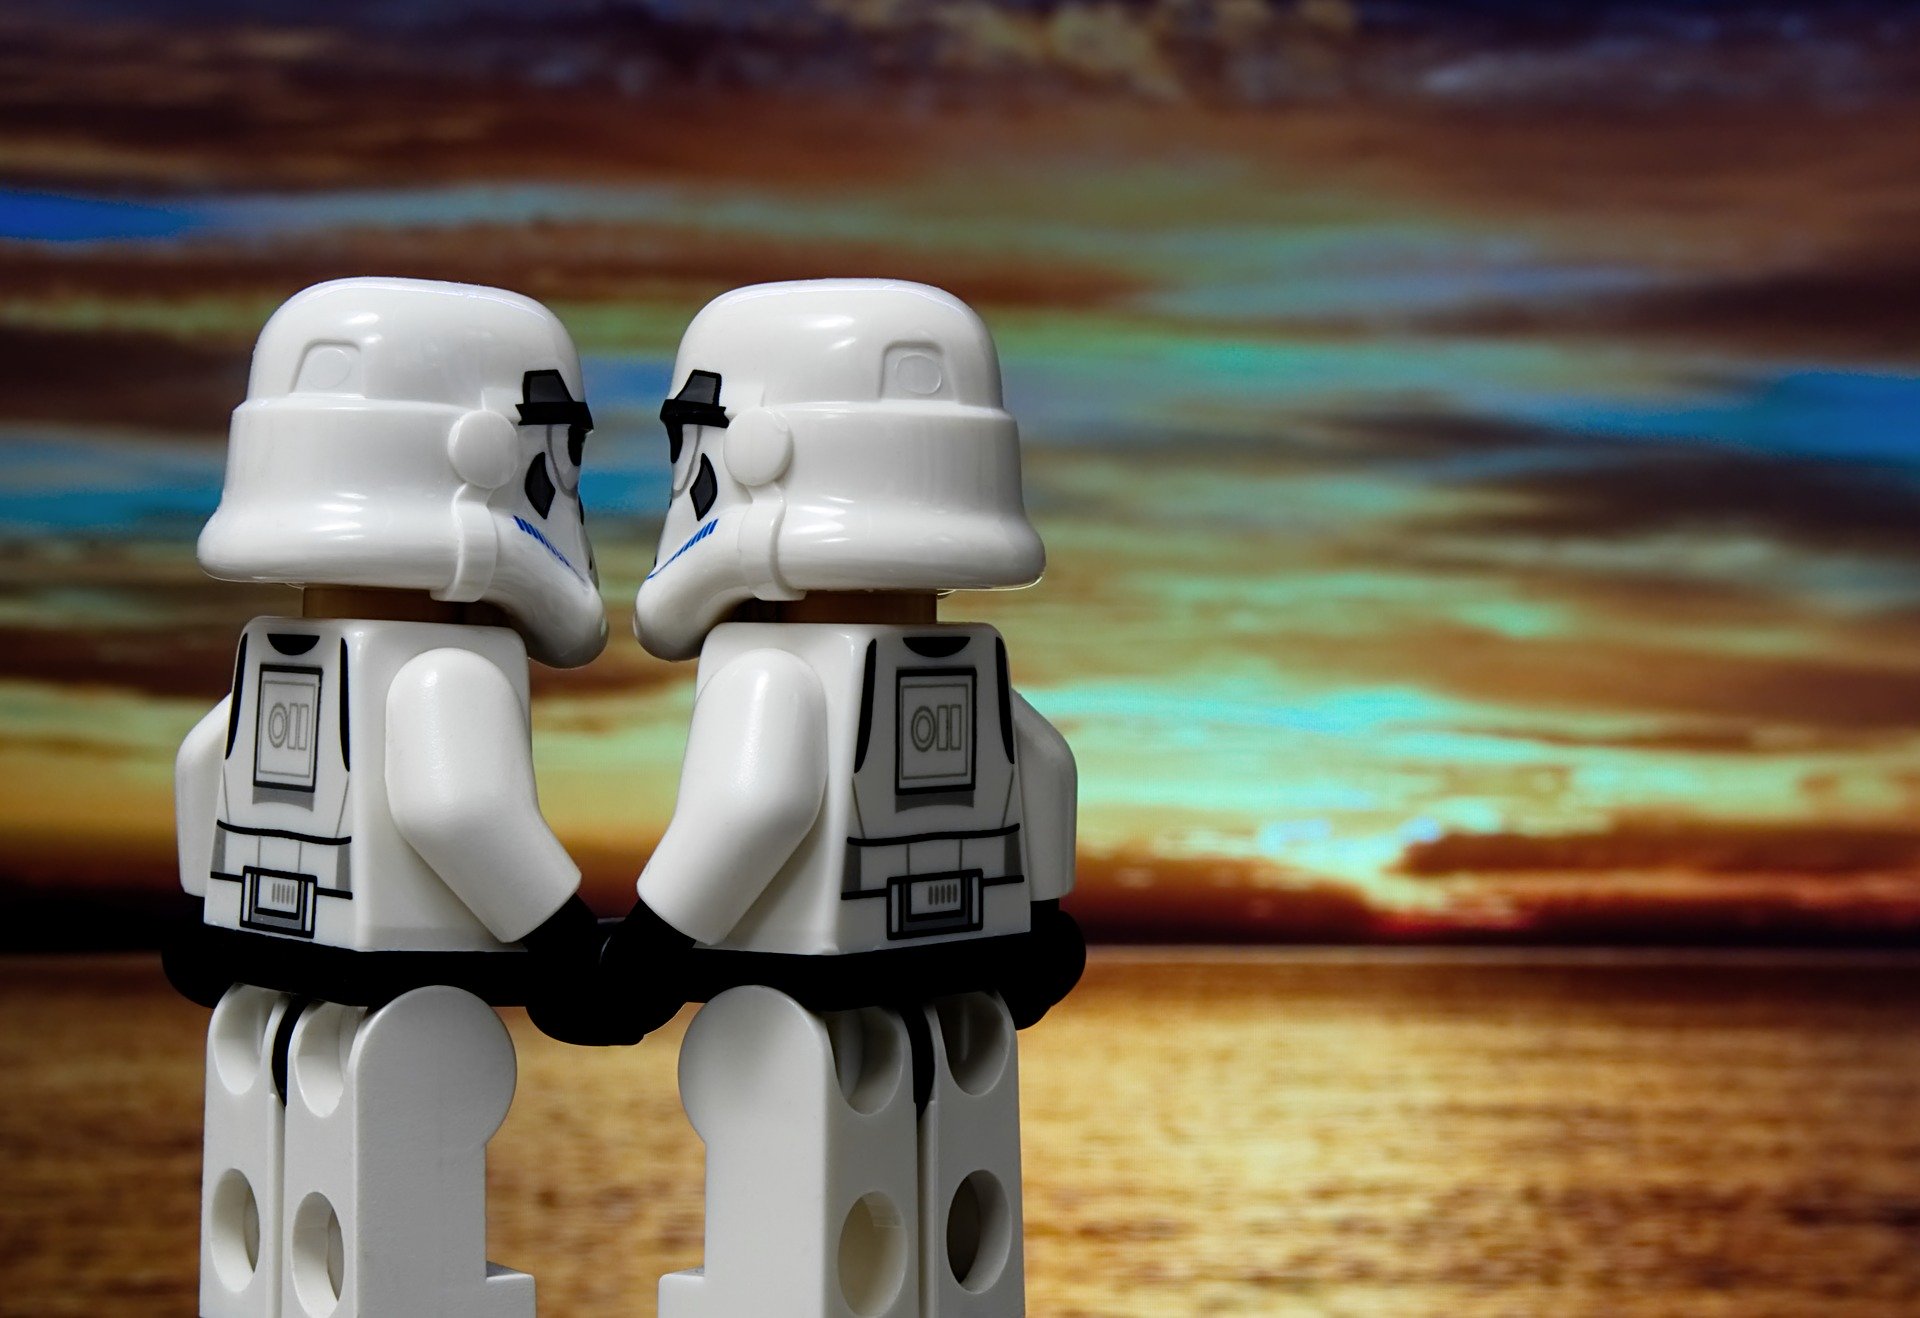 Star wars theme marriage proposal